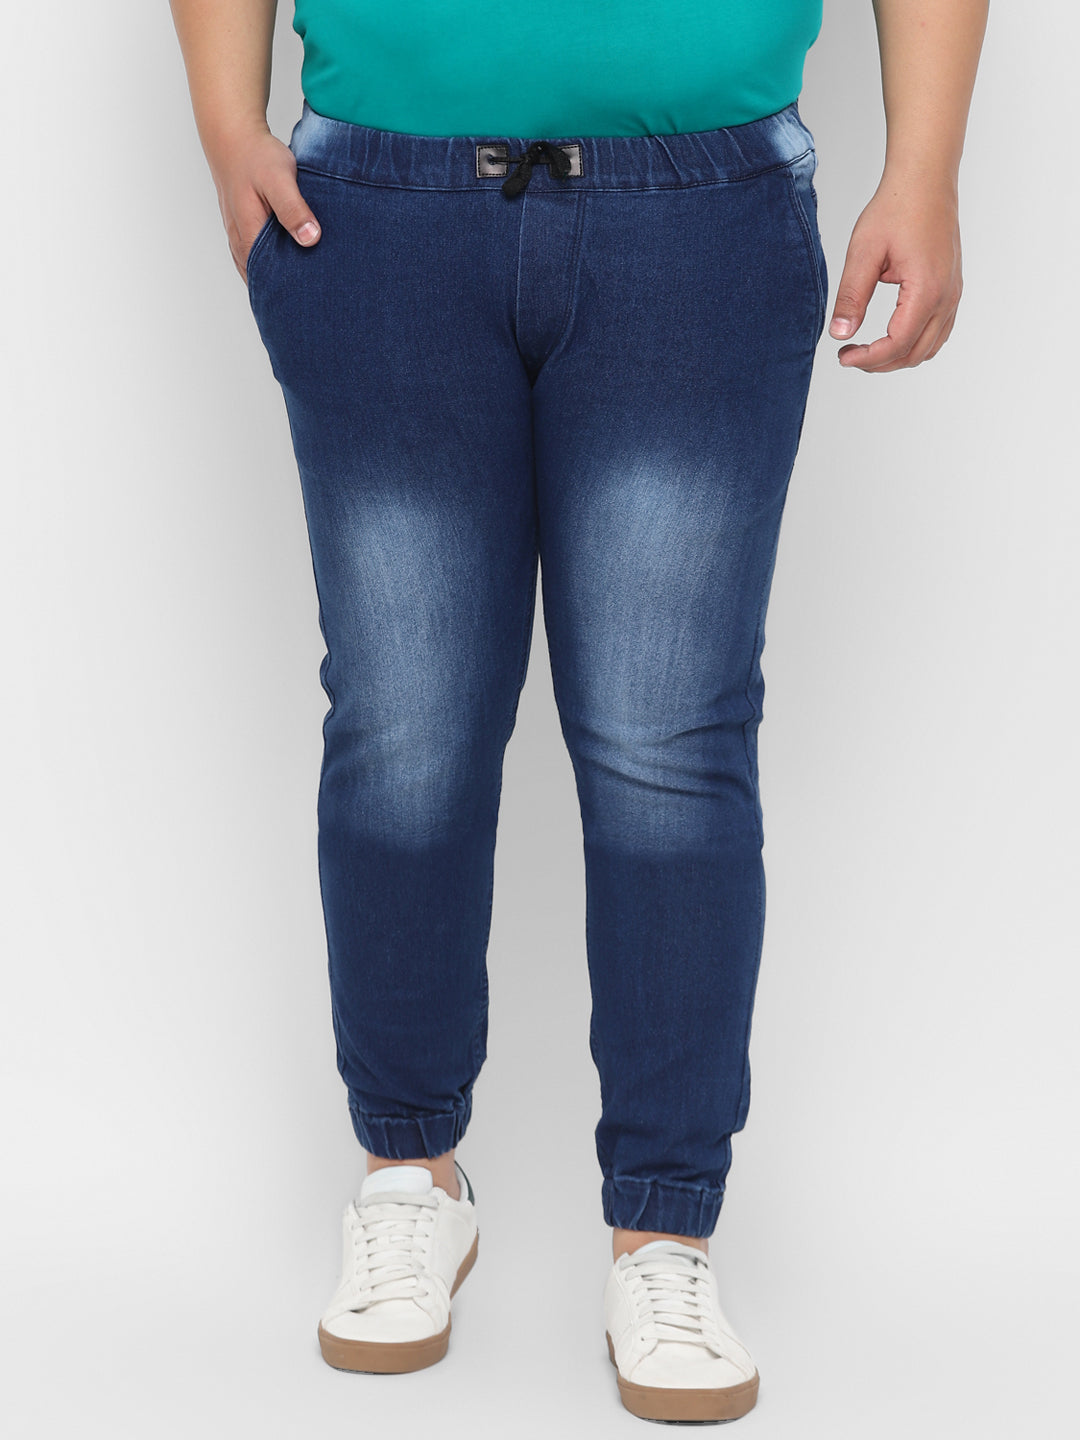 Urbano Plus Men's Blue Regular Fit Washed Jogger Jeans Stretchable